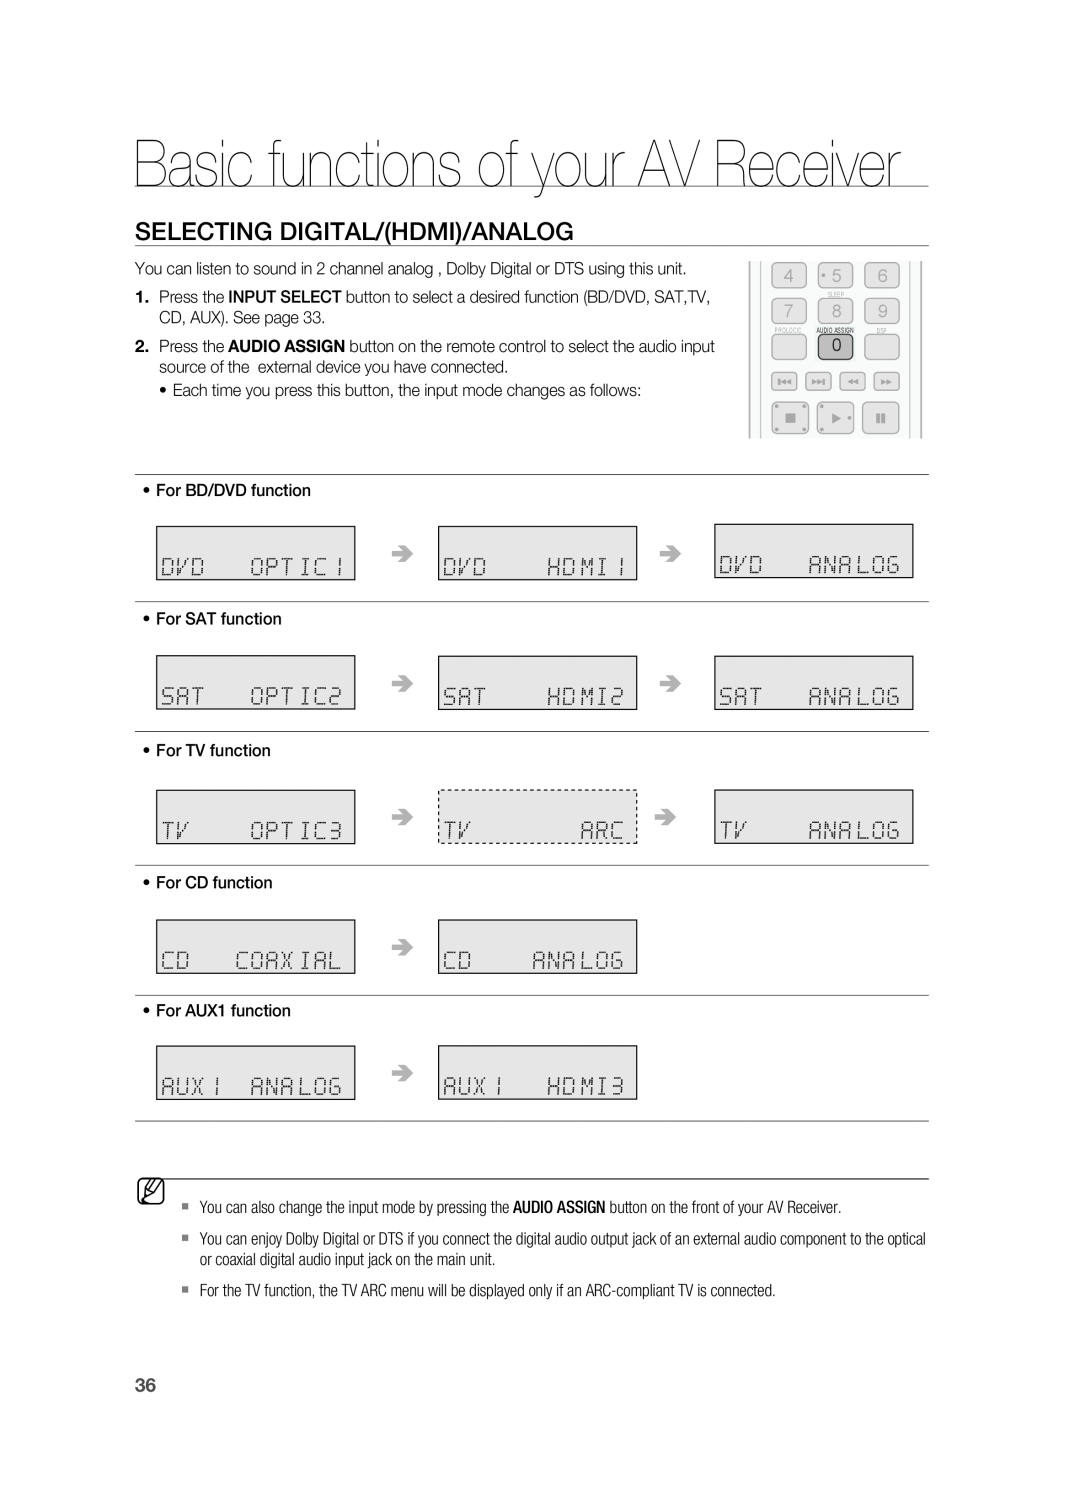 Samsung HW-C900-XAA user manual Basic functions of your AV Receiver, Selecting Digital/Hdmi/Analog 